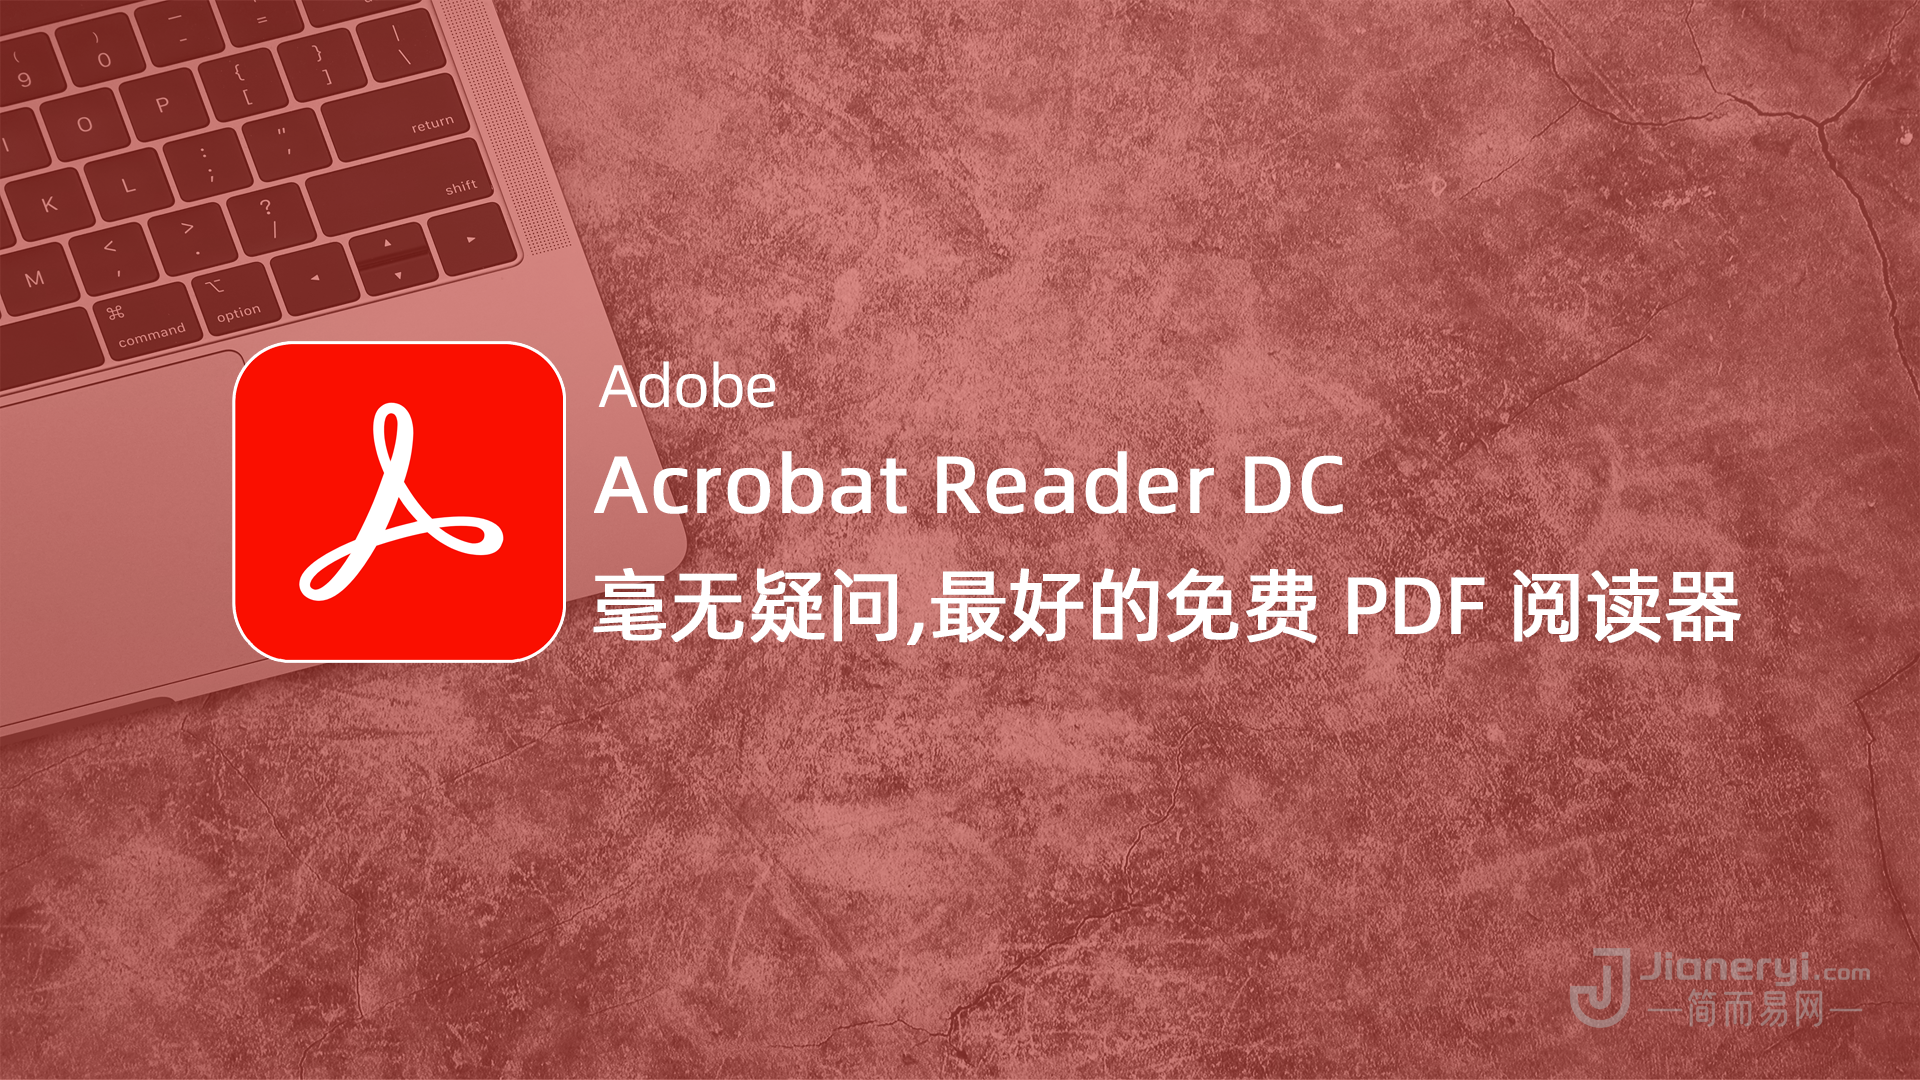 Adobe Acrobat Reader DC – 最好的官方免费PDF文档阅读器！丨简而易网